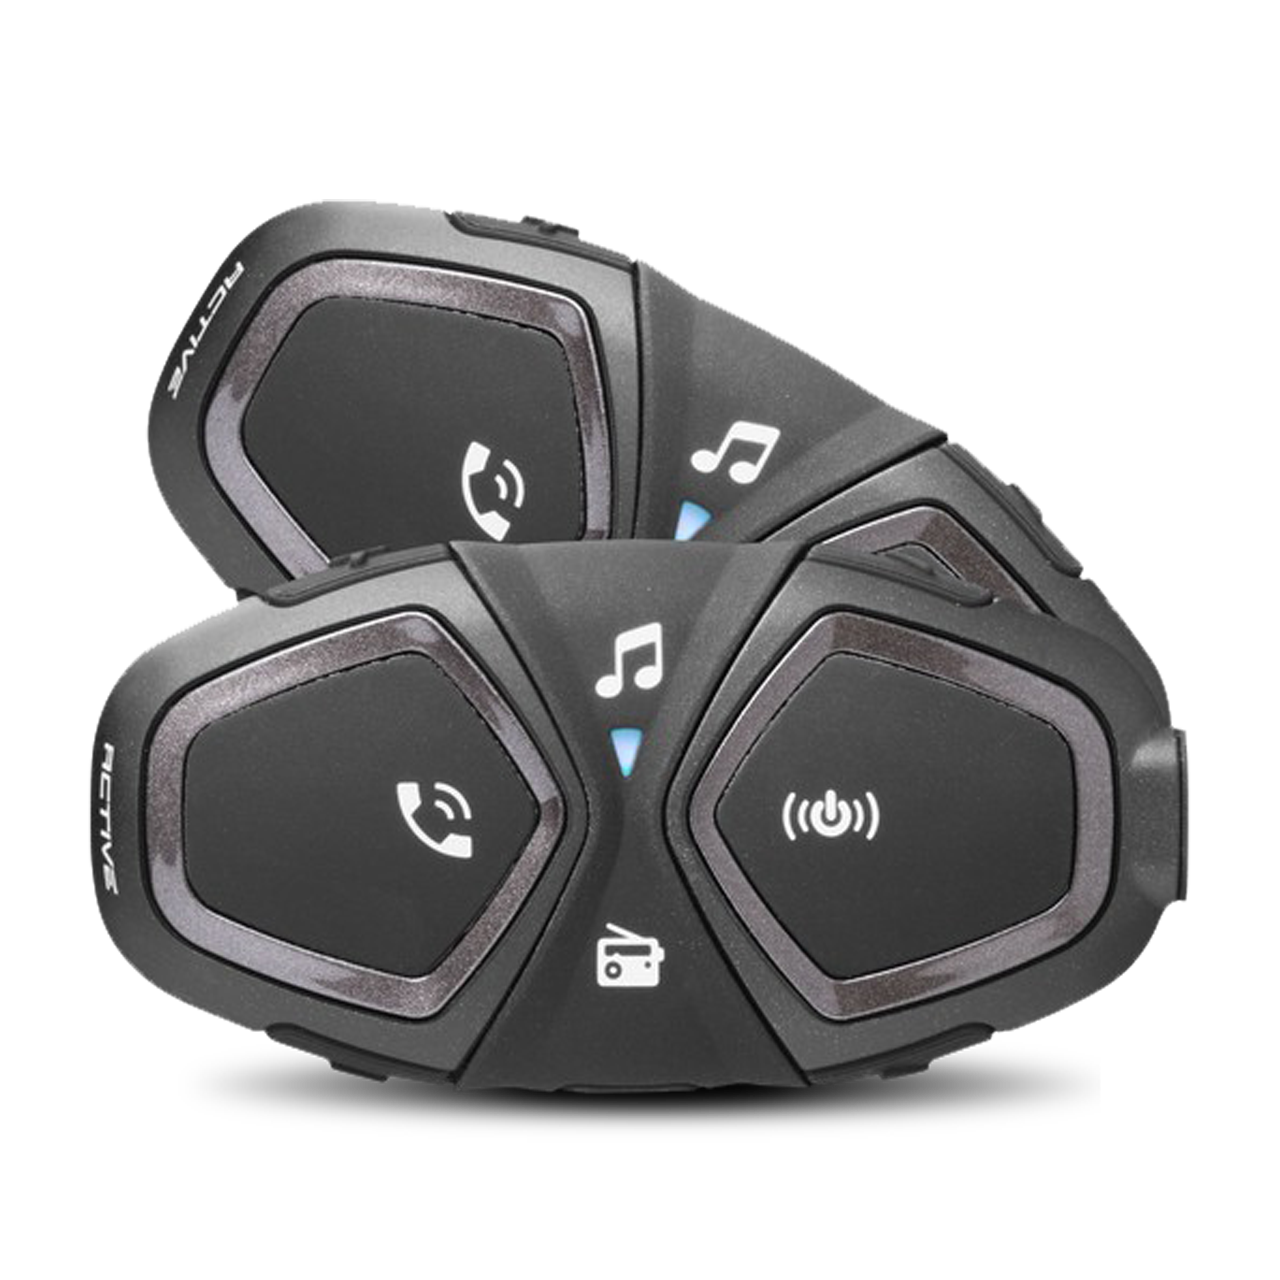 Intercom Moto Bluetooth, IP67 Étanche Casque Bluetooth Full Duplex